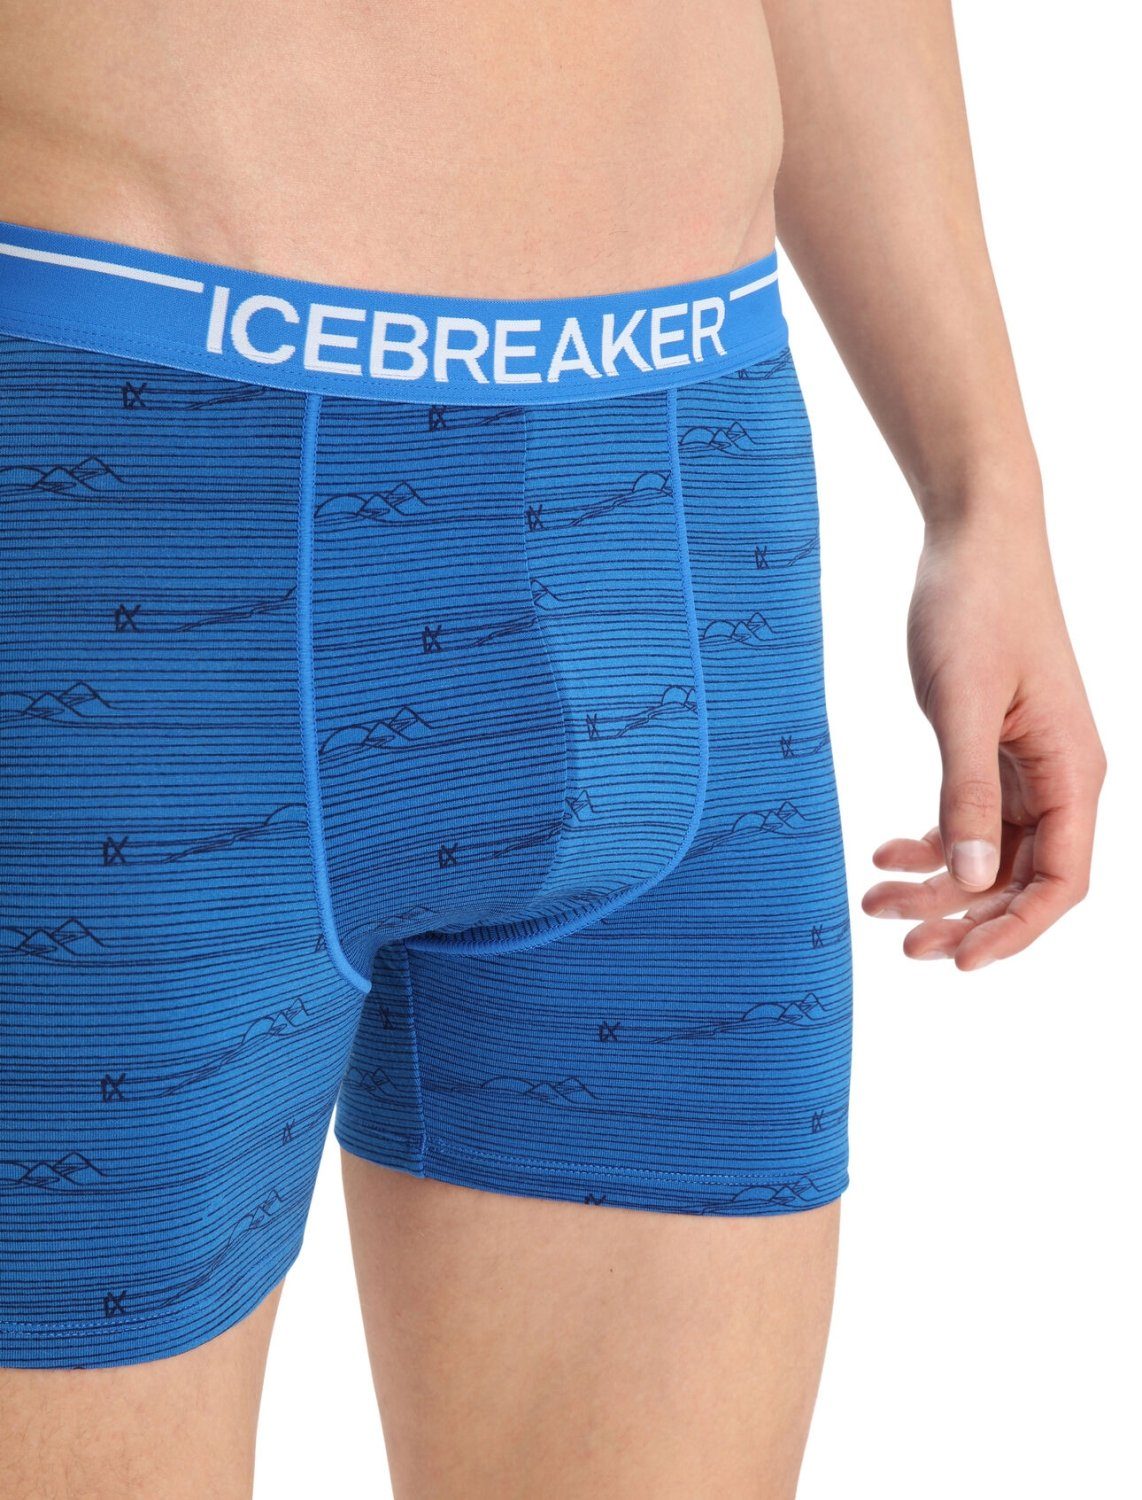 Icebreaker Anatomica NAVY/A LAZURITE/MIDNIGHT Boxers Boxershorts IB671 M